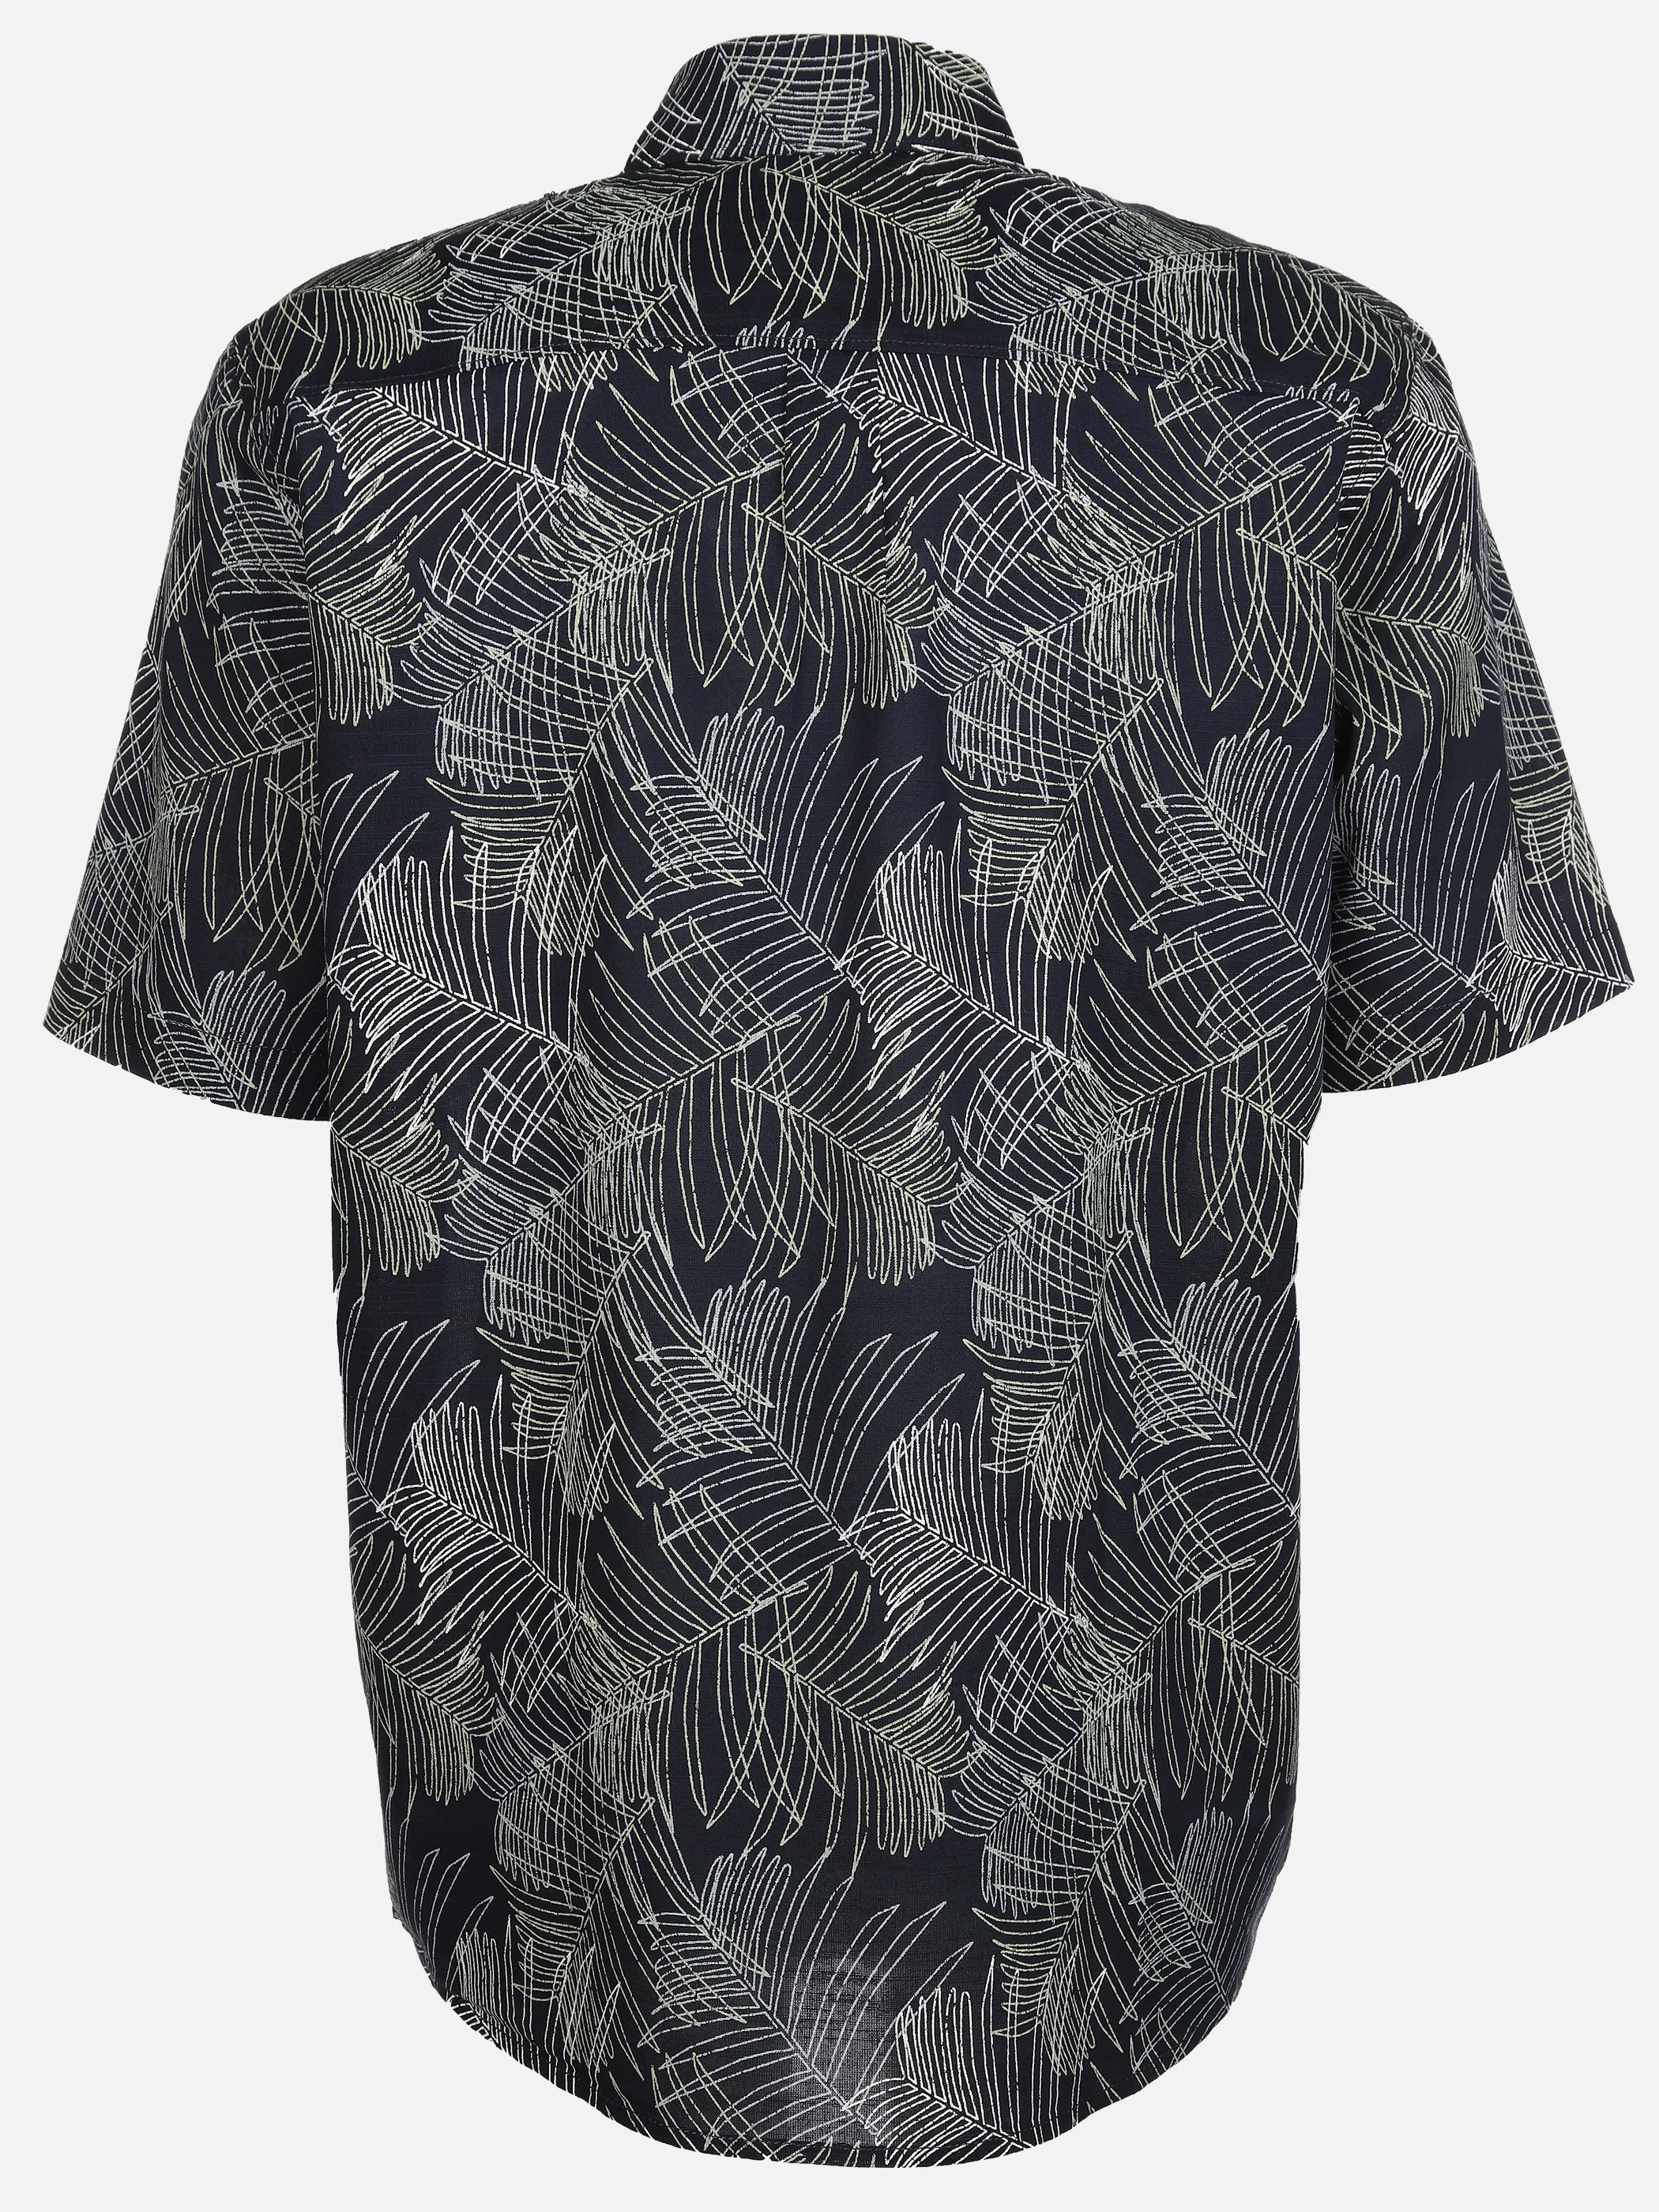 Tom Tailor 1040128 comfort printed shirt Blau 890955 35095 2